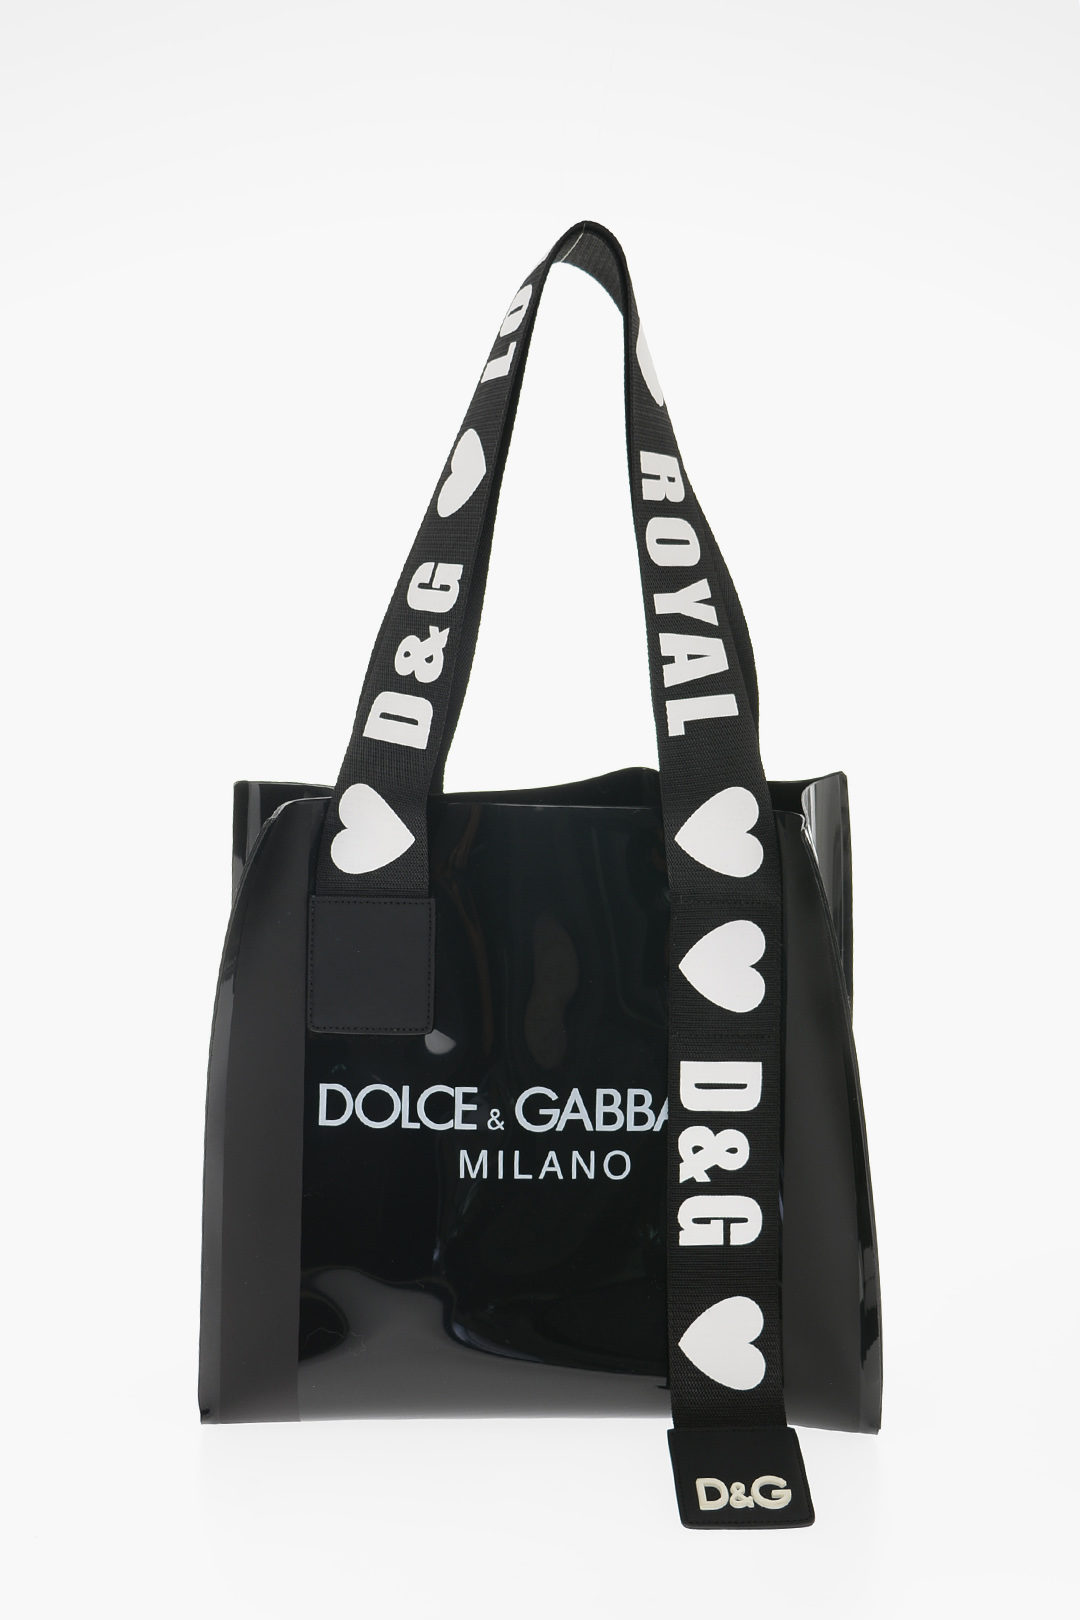 Dolce & Gabbana Pvc GLOSS Shopper bag women - Glamood Outlet